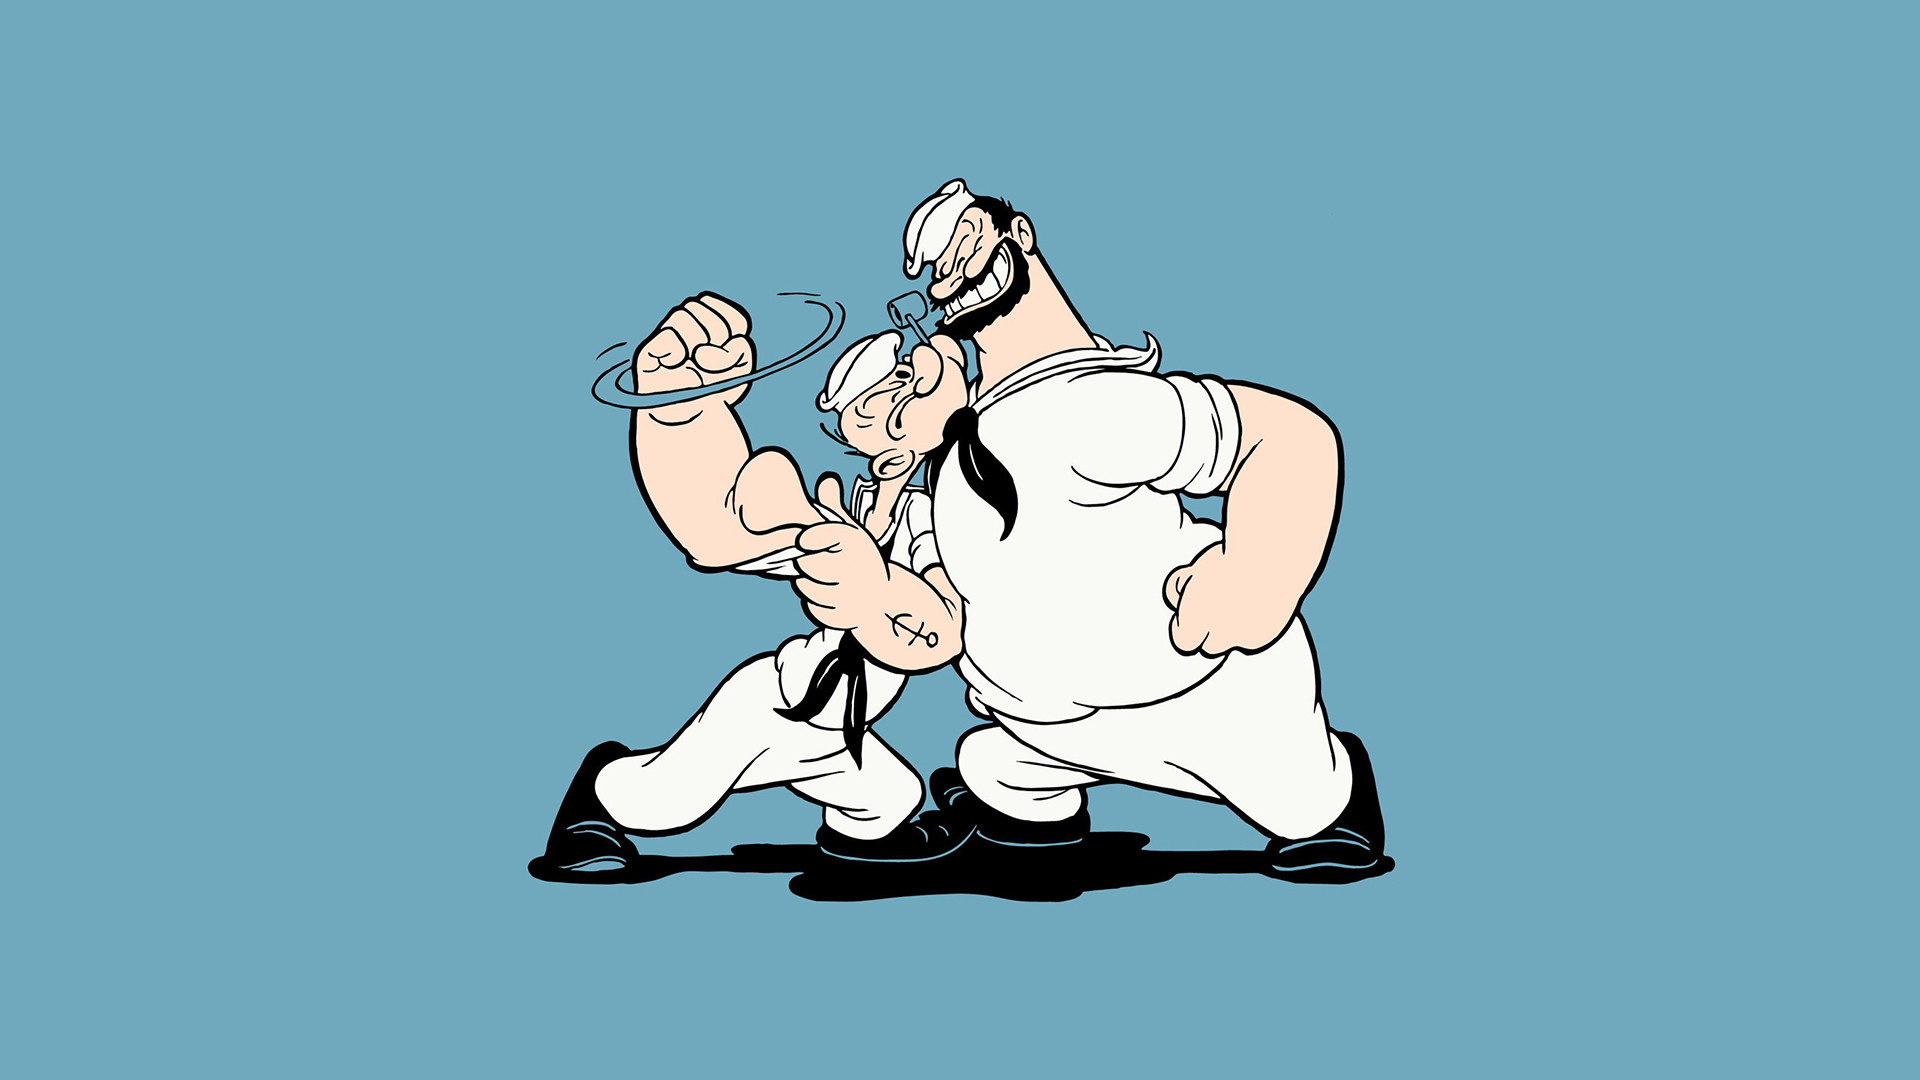 Popeye - 90s Cartoons